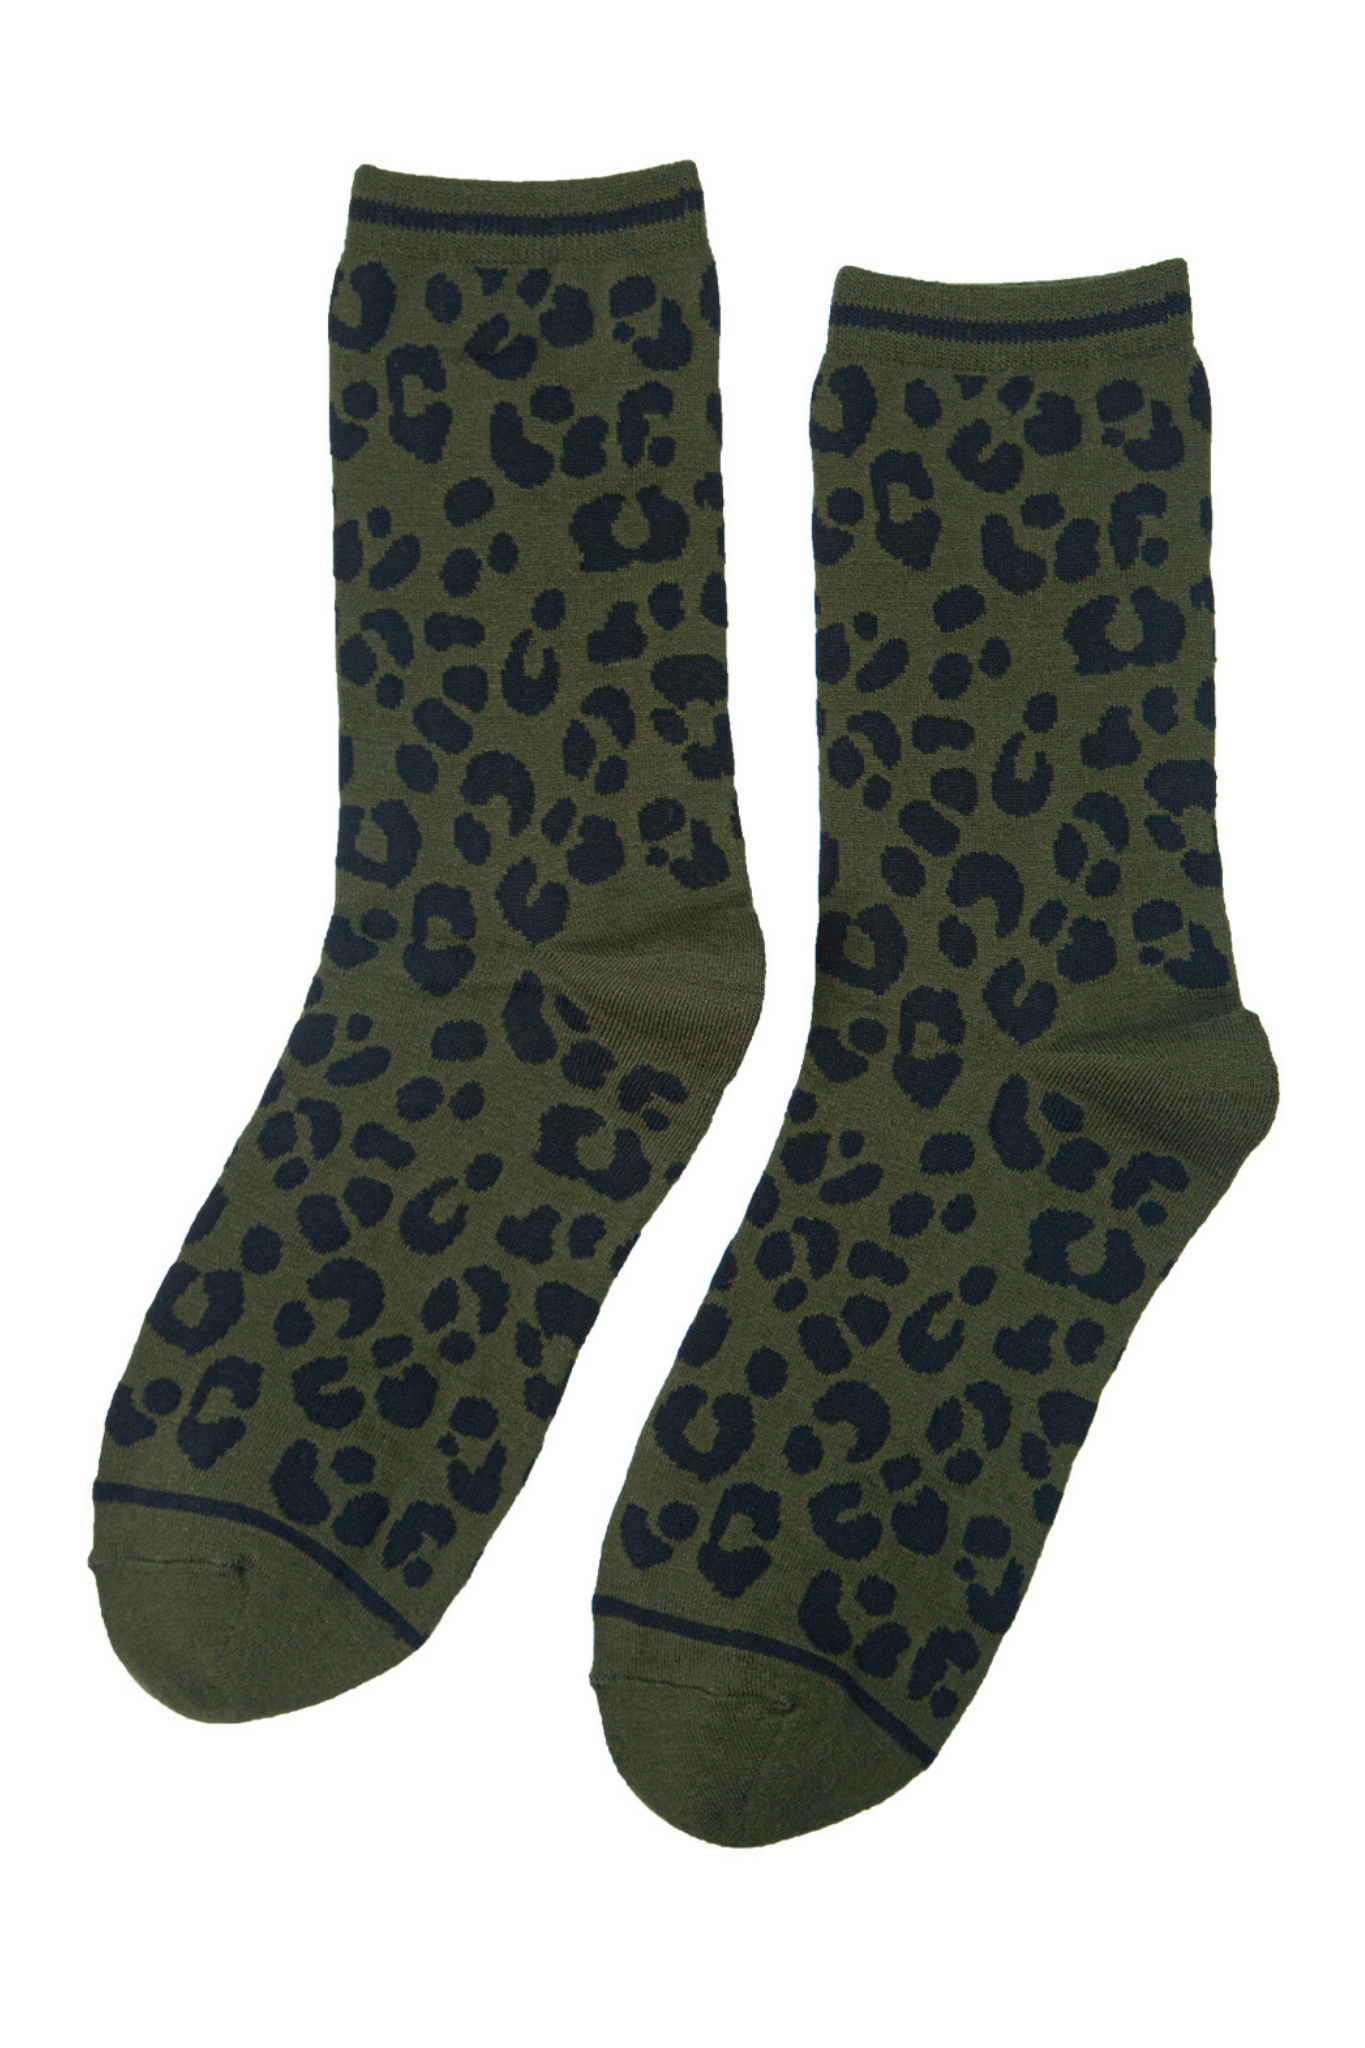 green and black animal print ankle socks